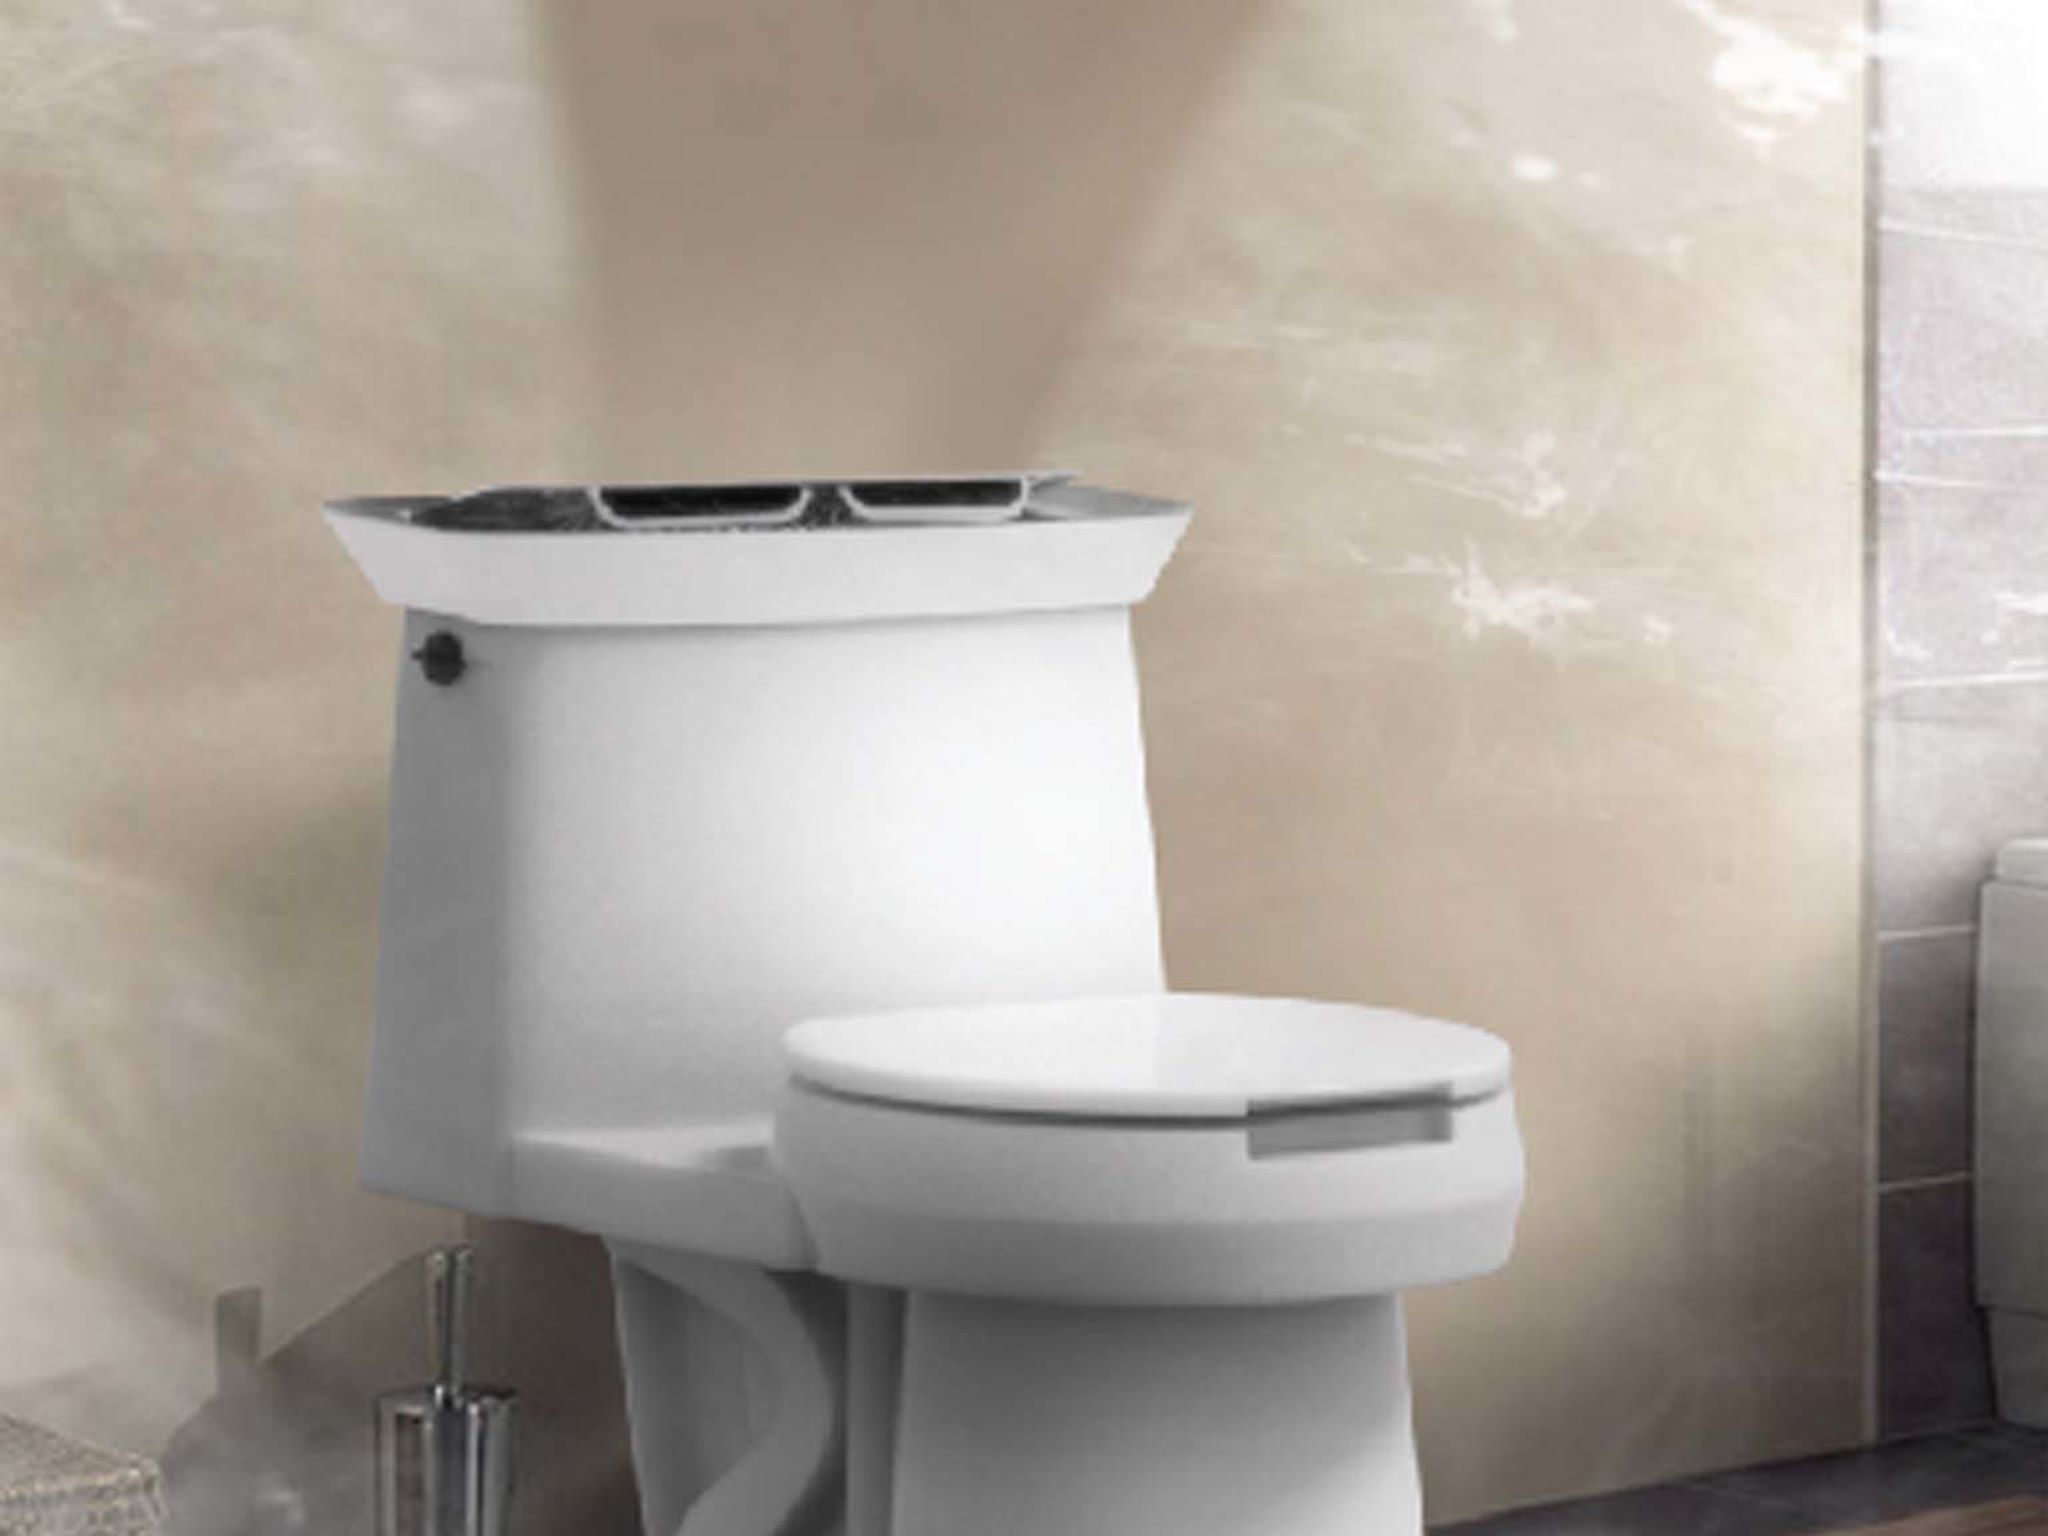 Cycle Toilet Dehumidifier If World, Dehumidifier For Bathroom